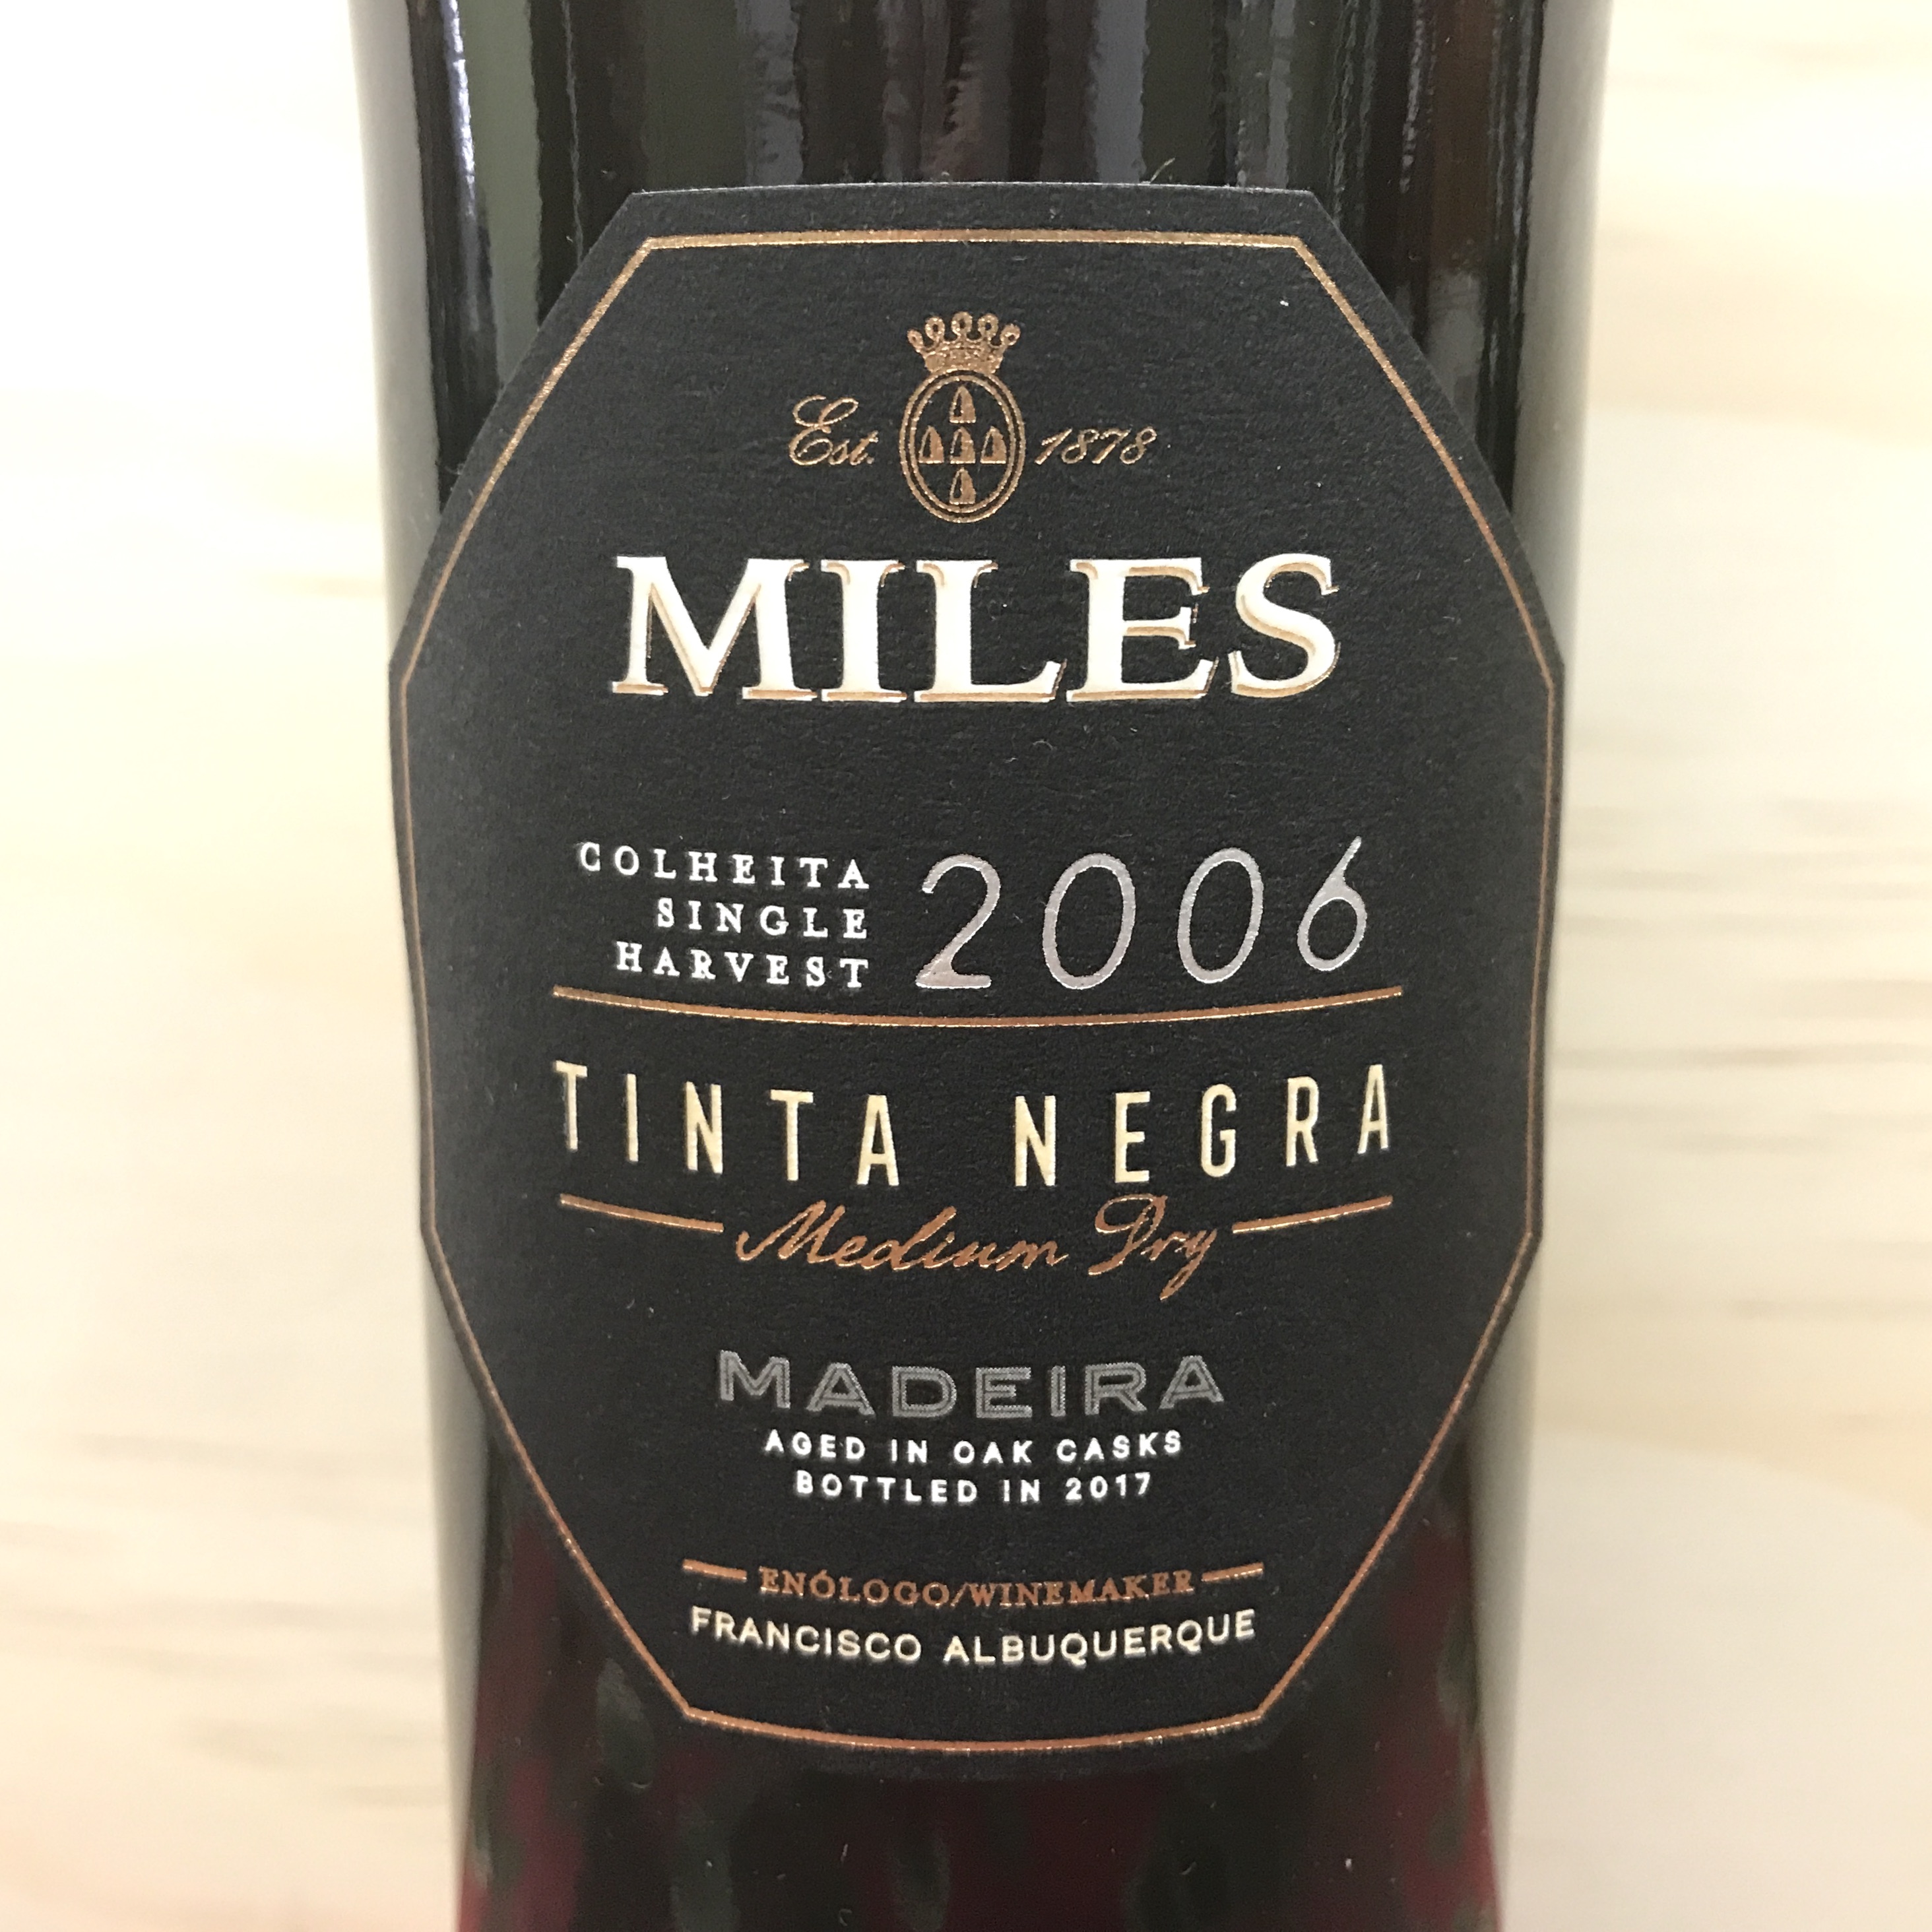 Miles Tinta Negra Medium Dry Madeira 2006